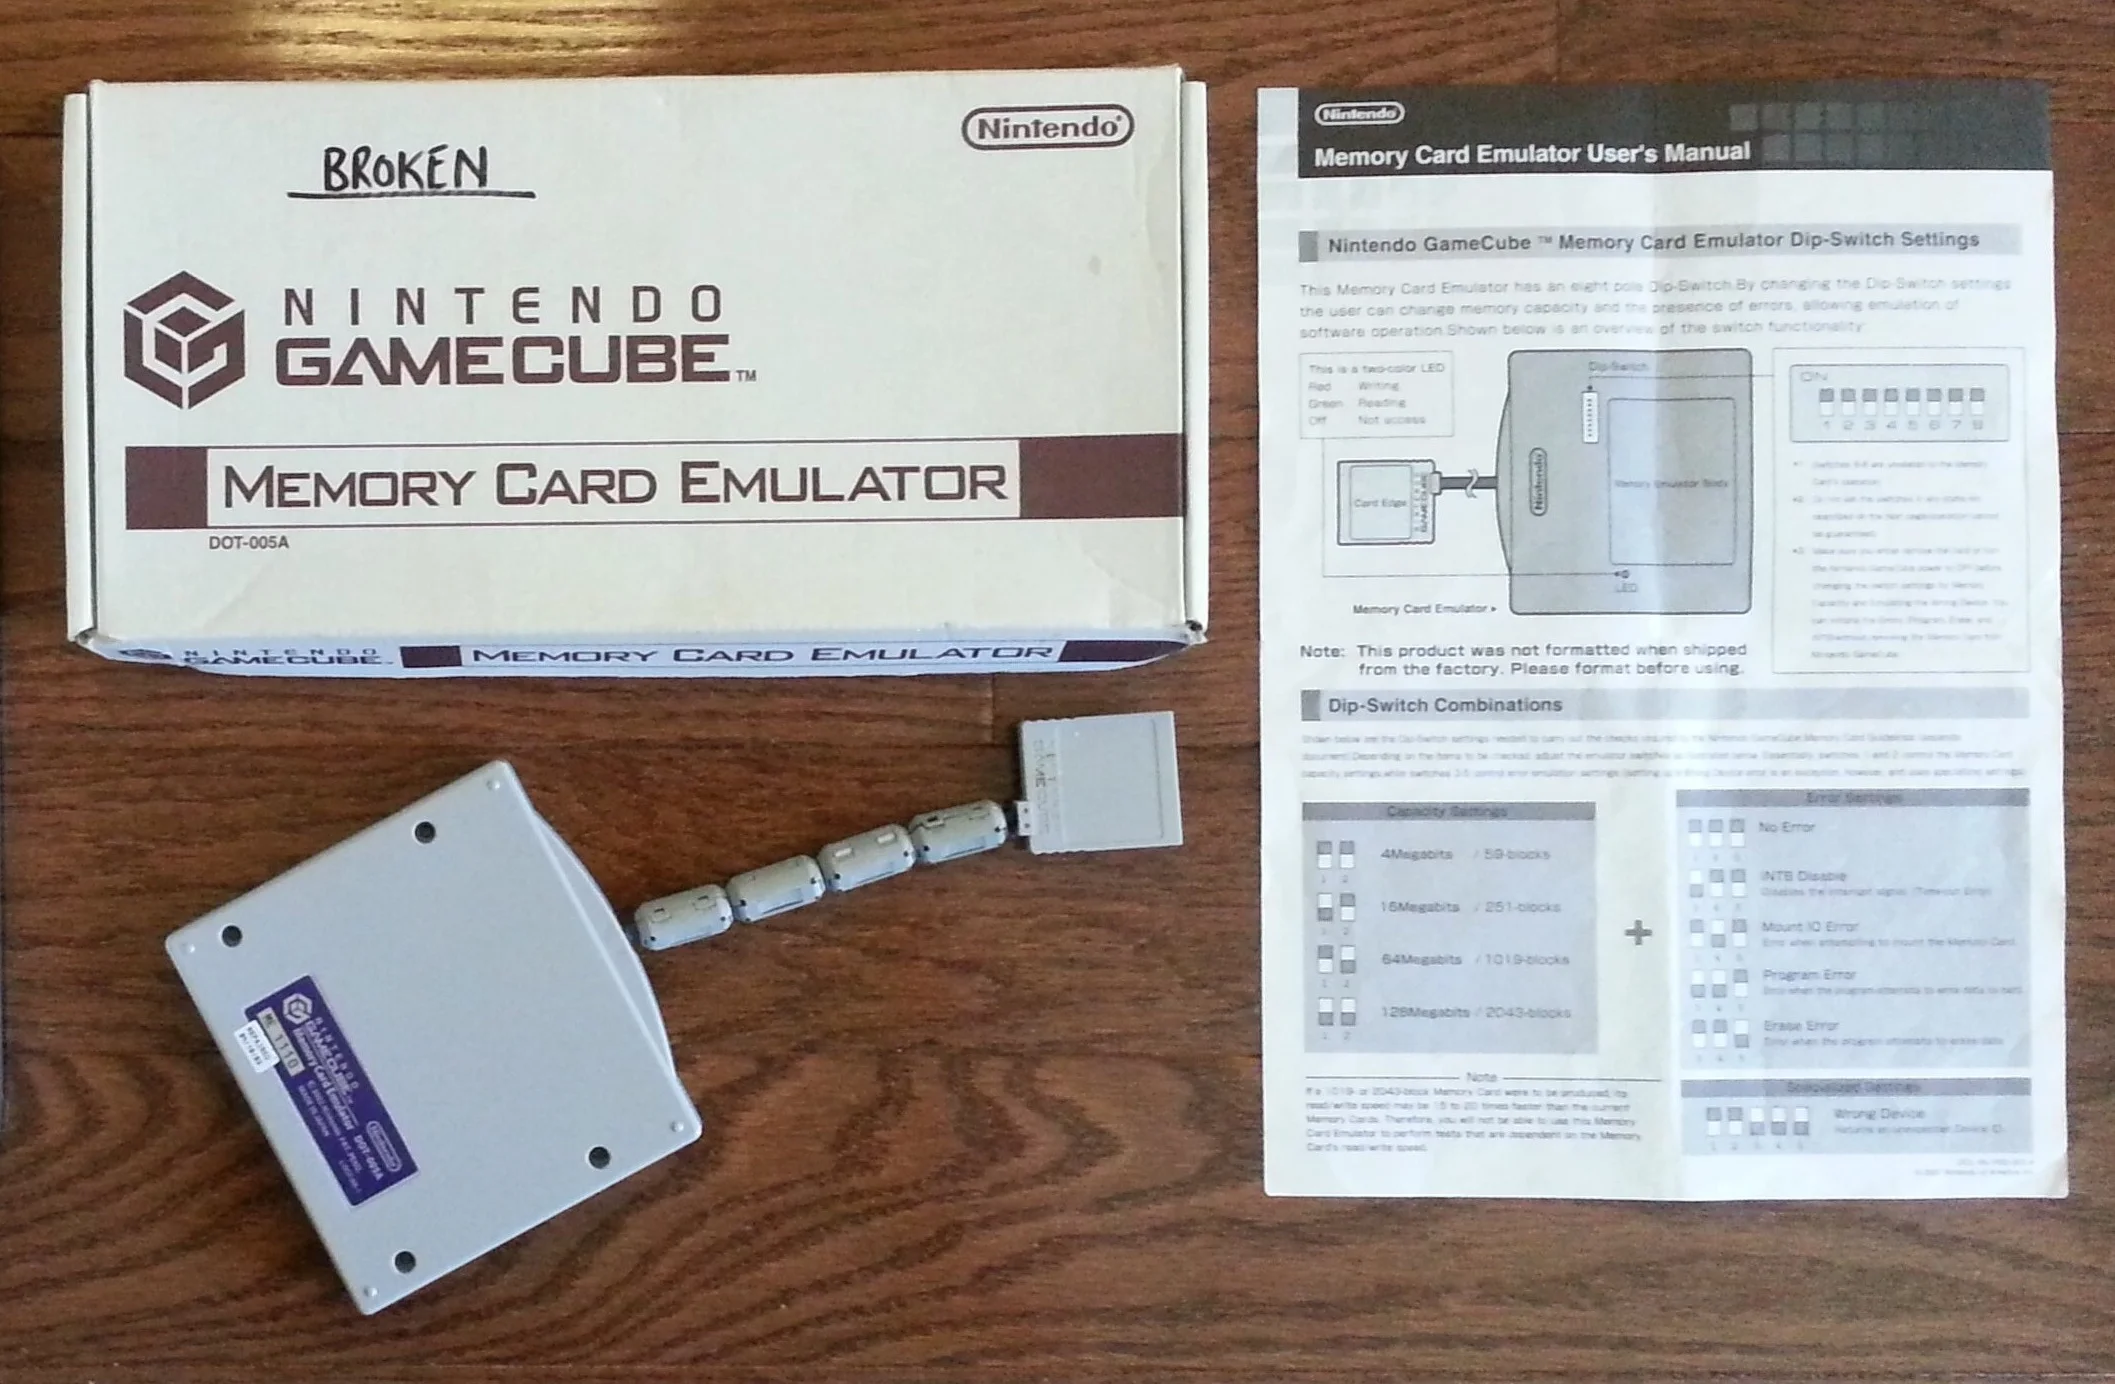  Nintendo GameCube Memory Card Emulator